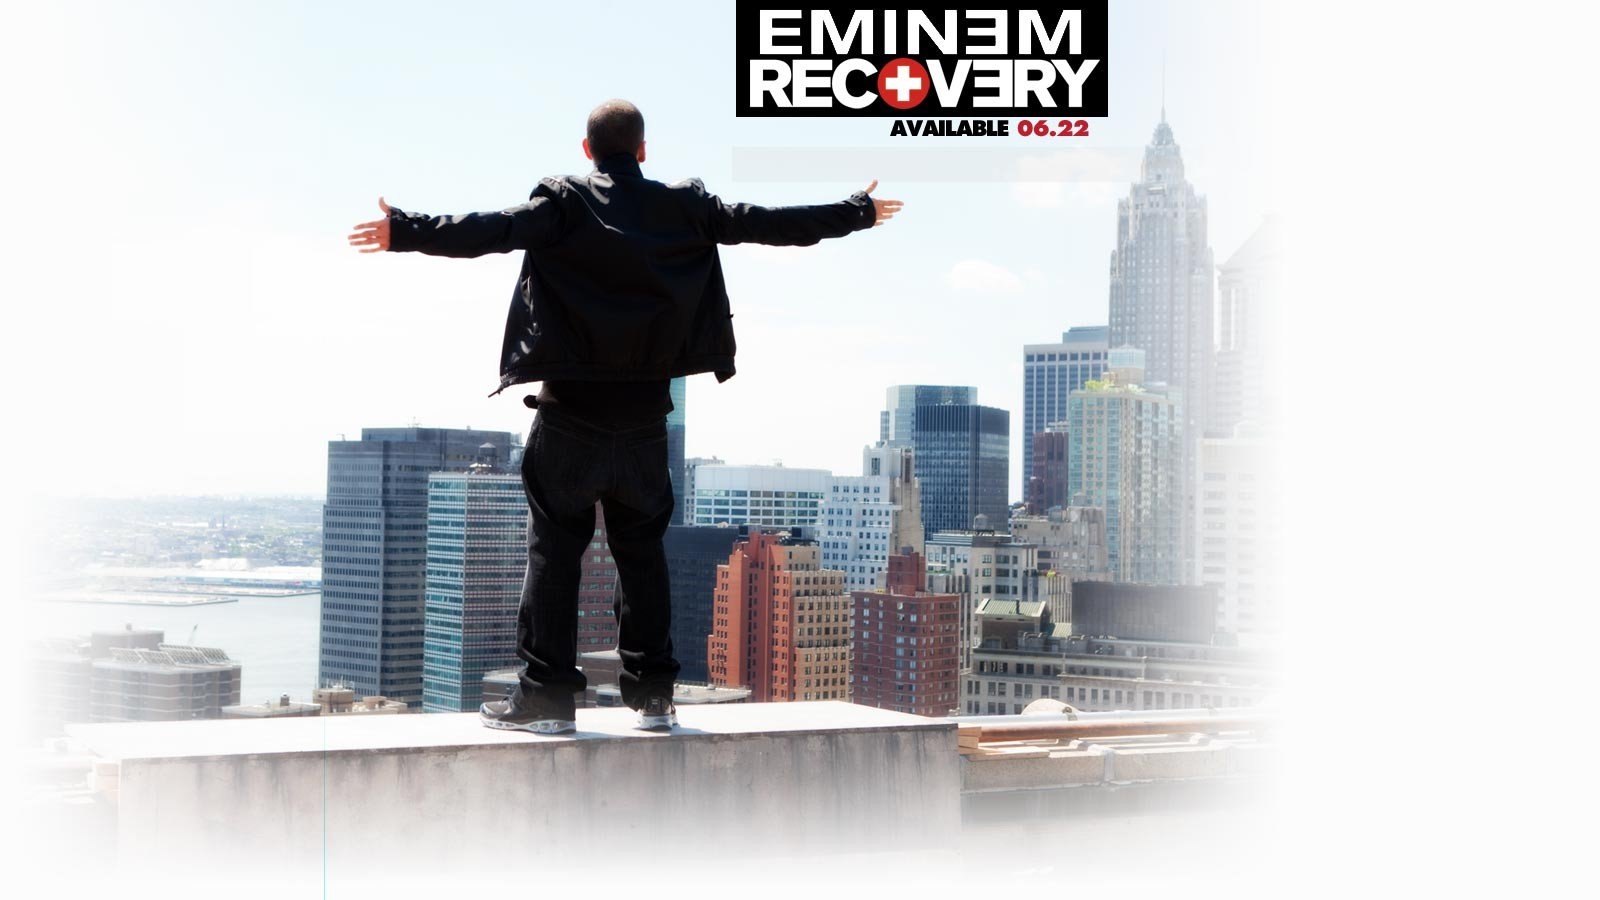 Eminem Album Covers Wallpapers